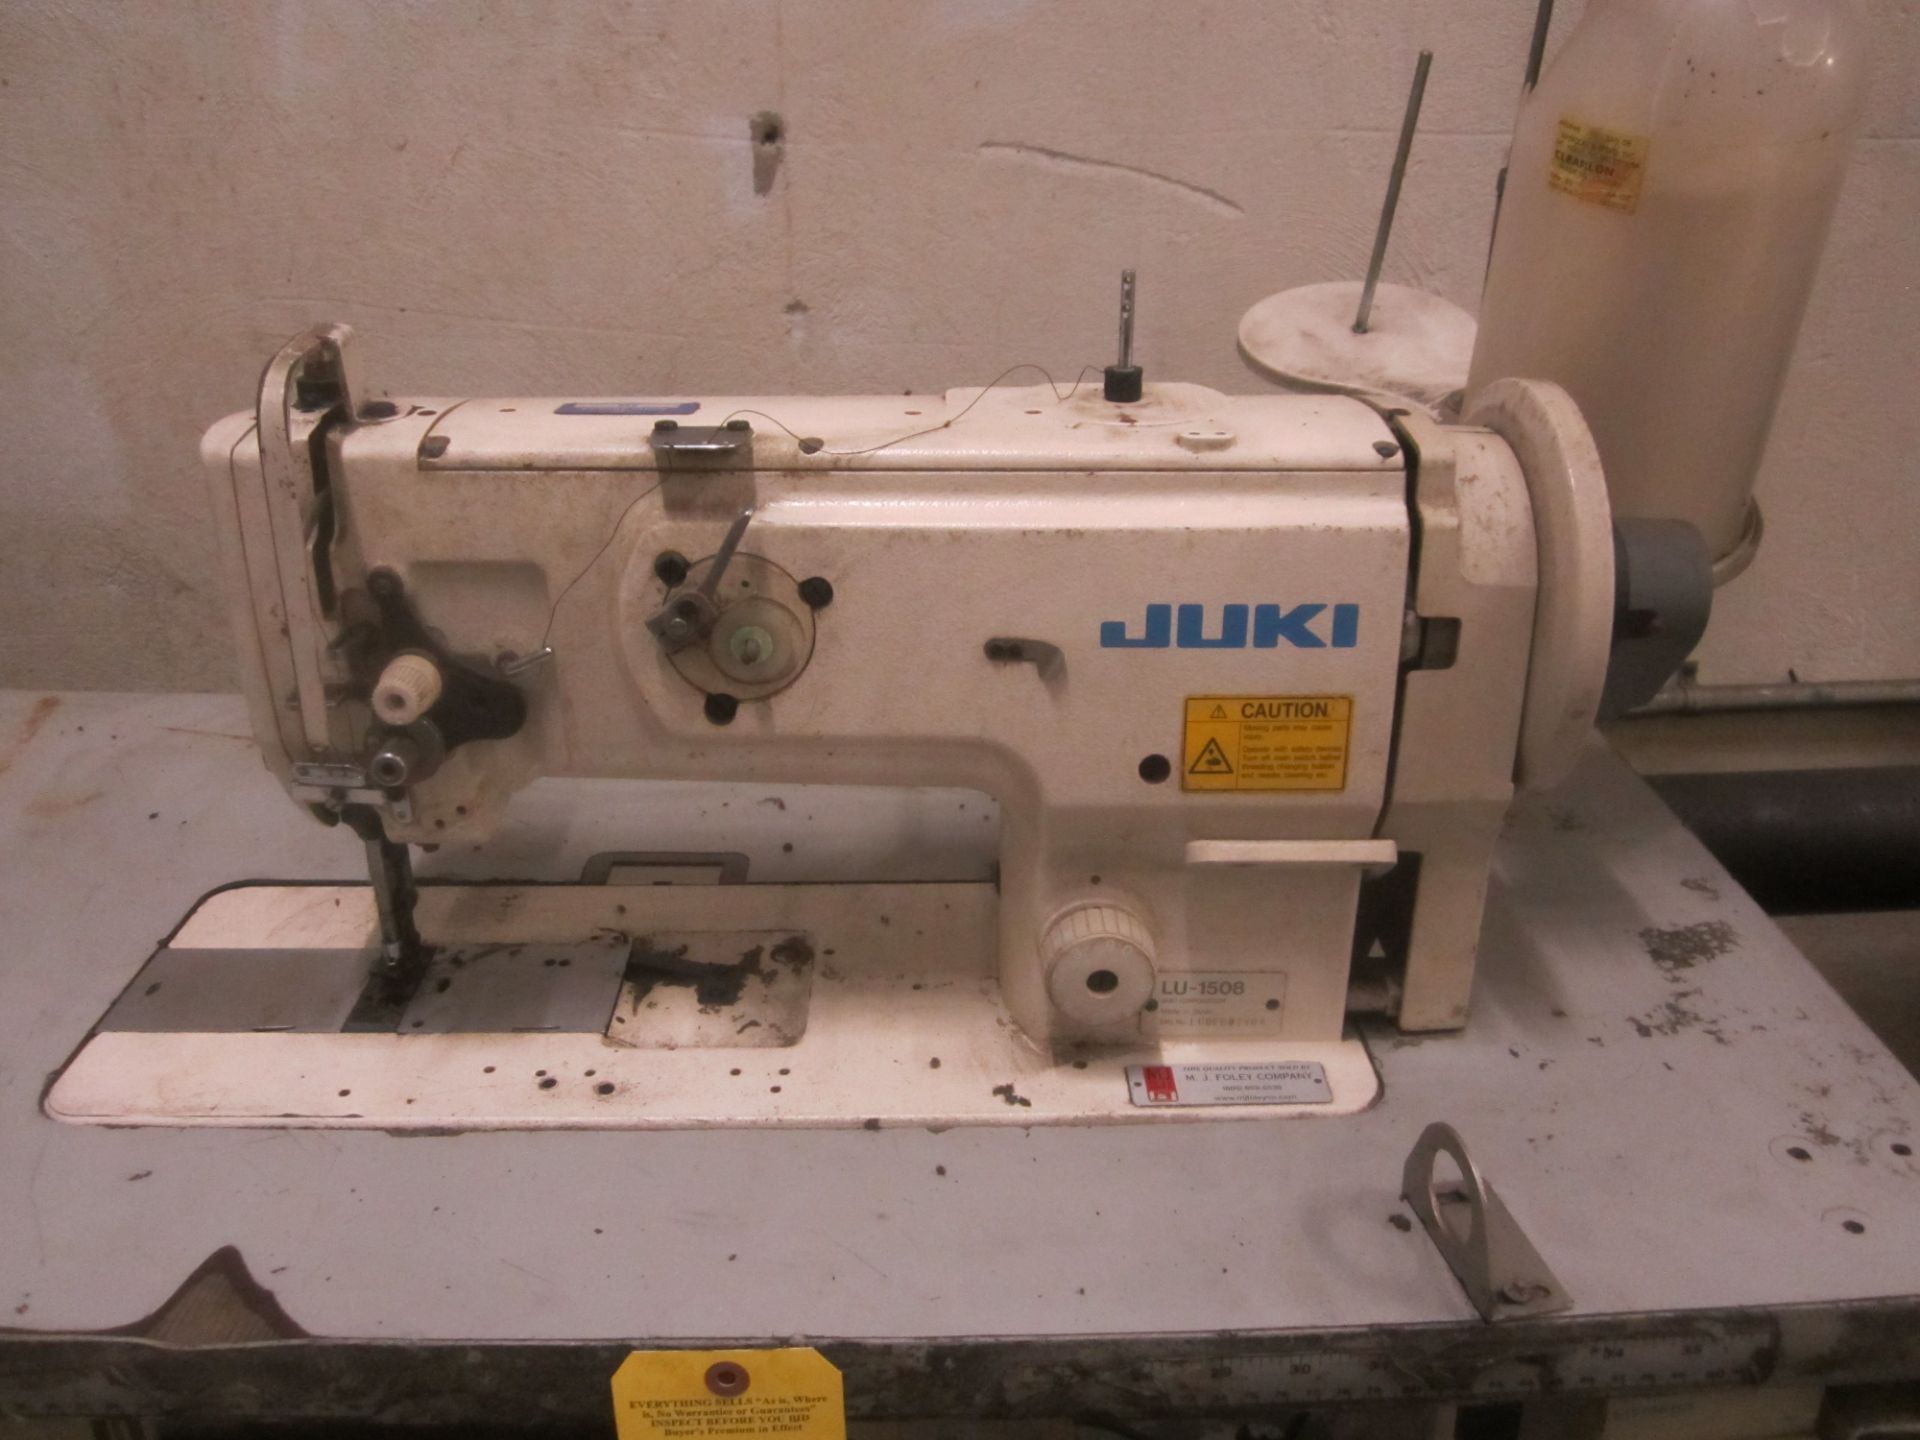 Juki Model LU-1508 Industrial Sewing Machine, s/n LU0EB02404, with Table - Image 3 of 4